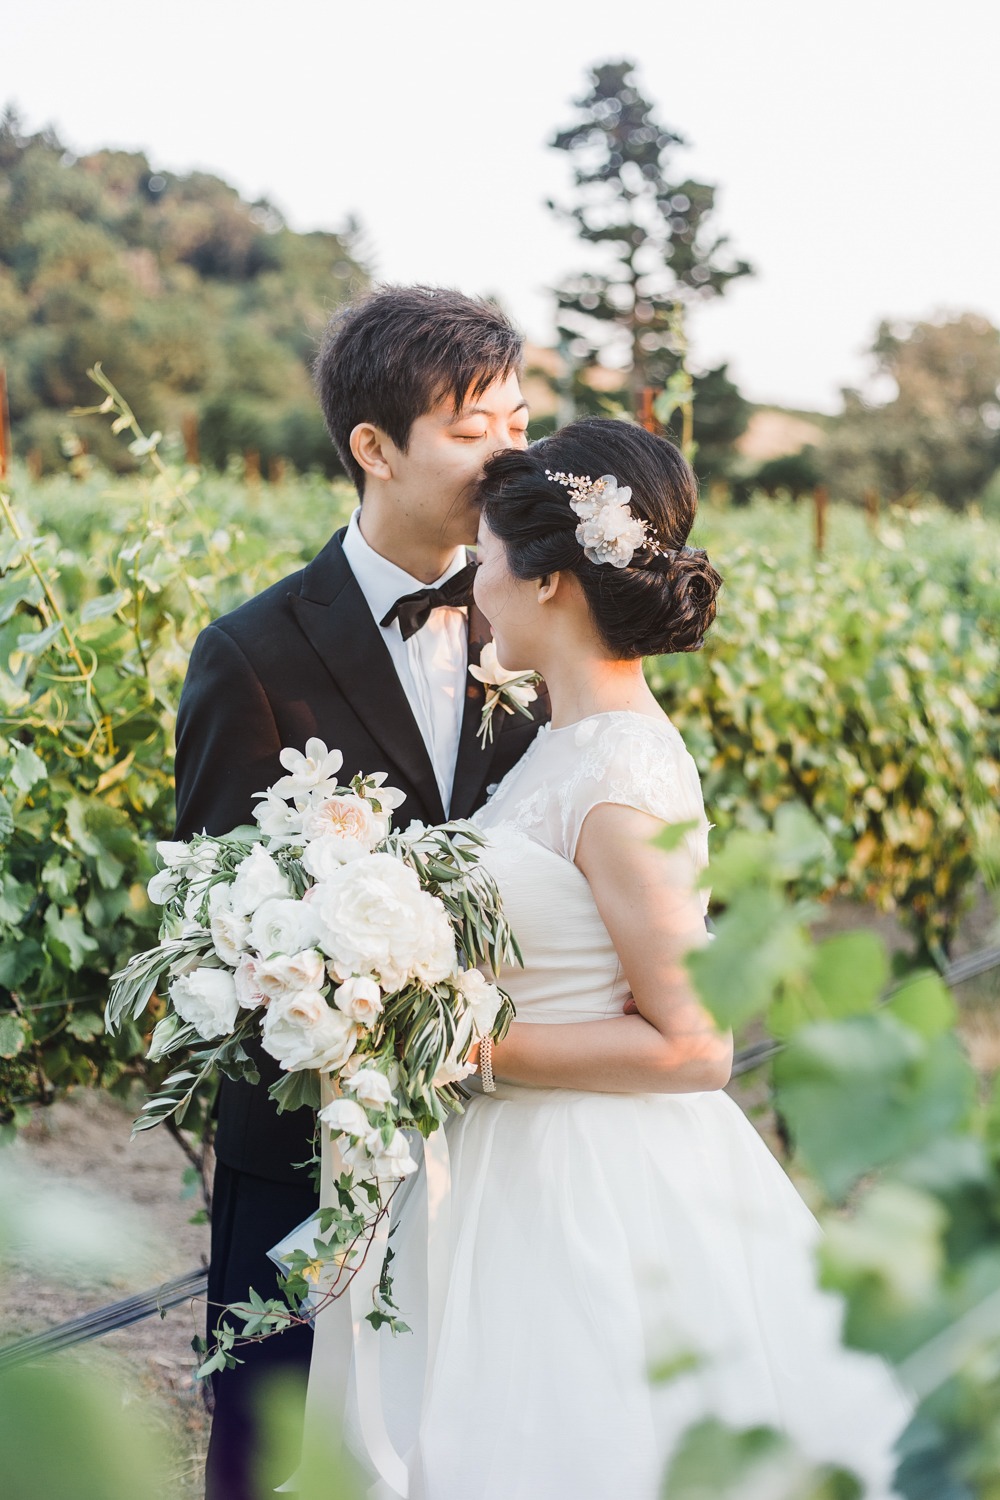 sweet wedding couple in a vineyard